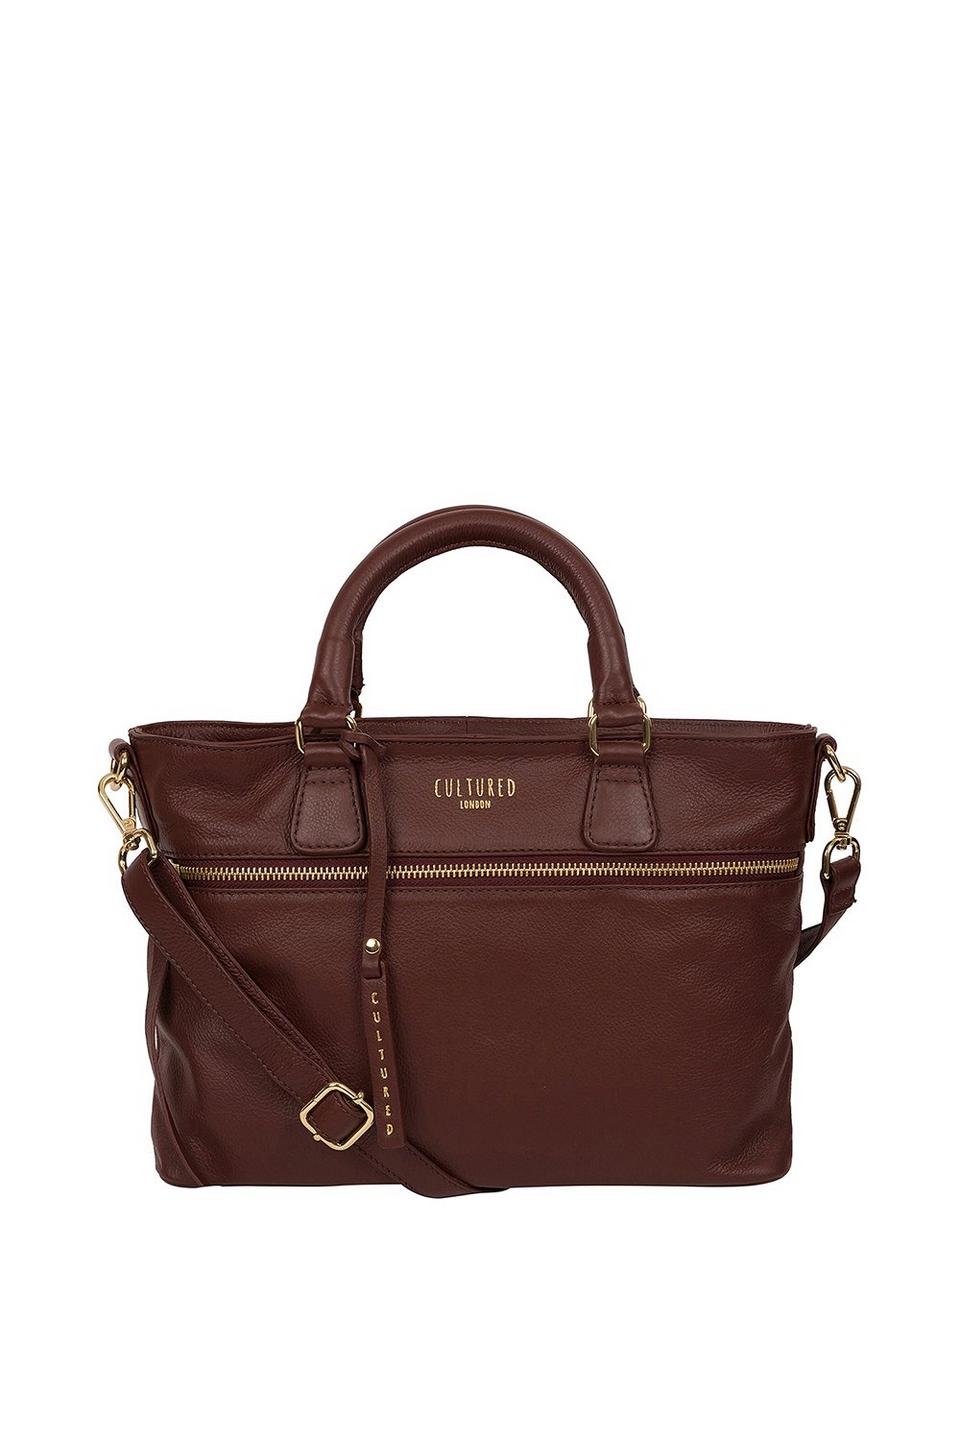 Bags & Purses | 'Mitcham' Leather Grab Bag | Cultured London